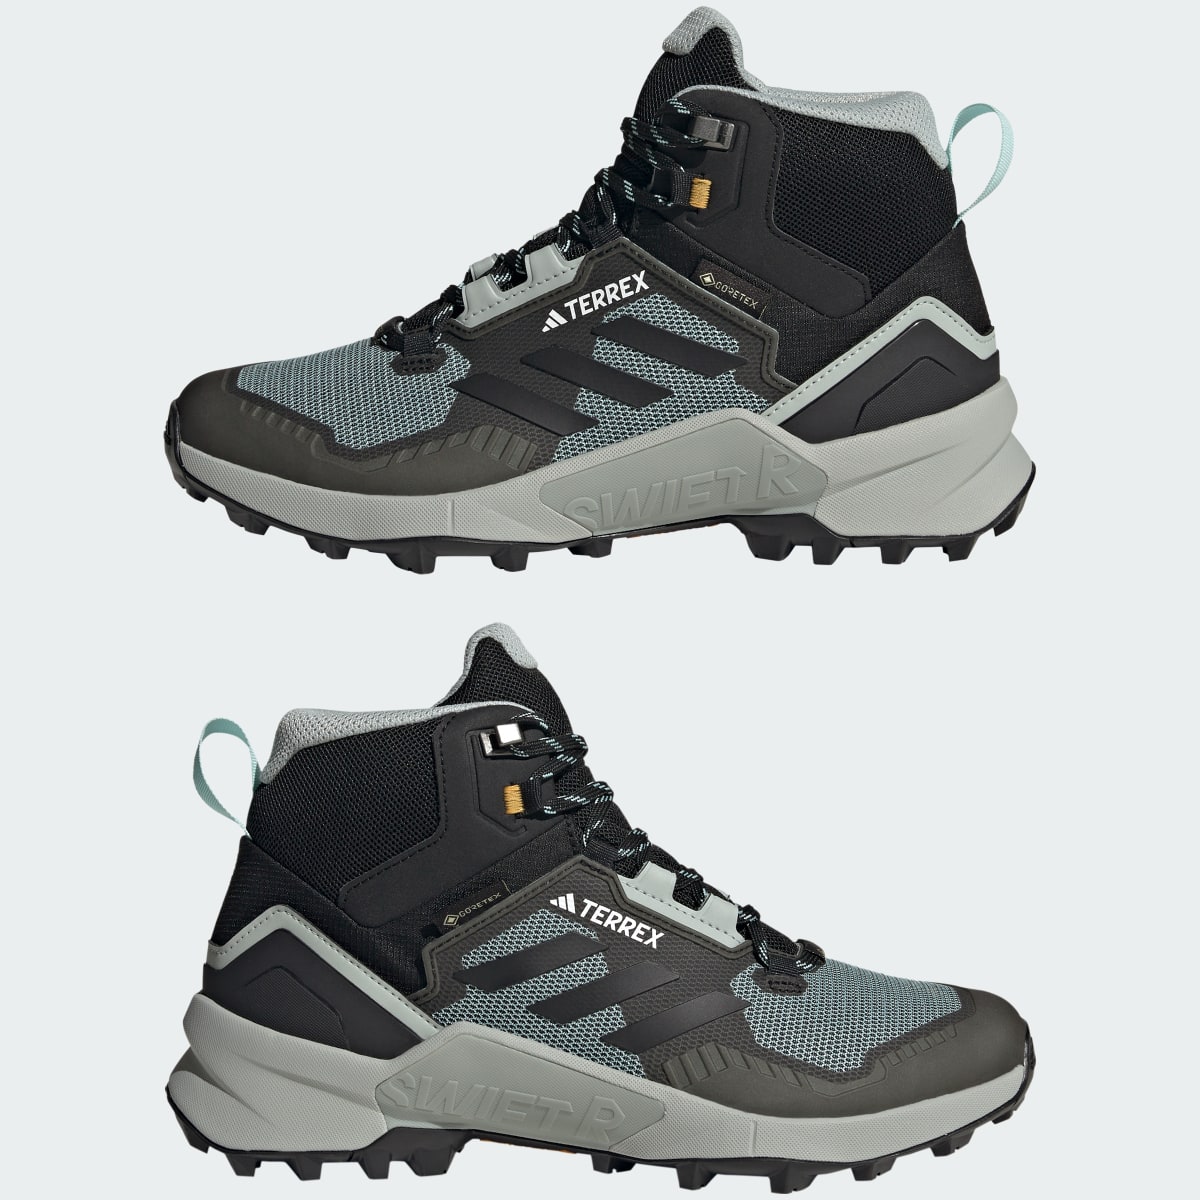 Adidas Terrex Swift R3 Mid GORE-TEX Hiking Shoes. 12